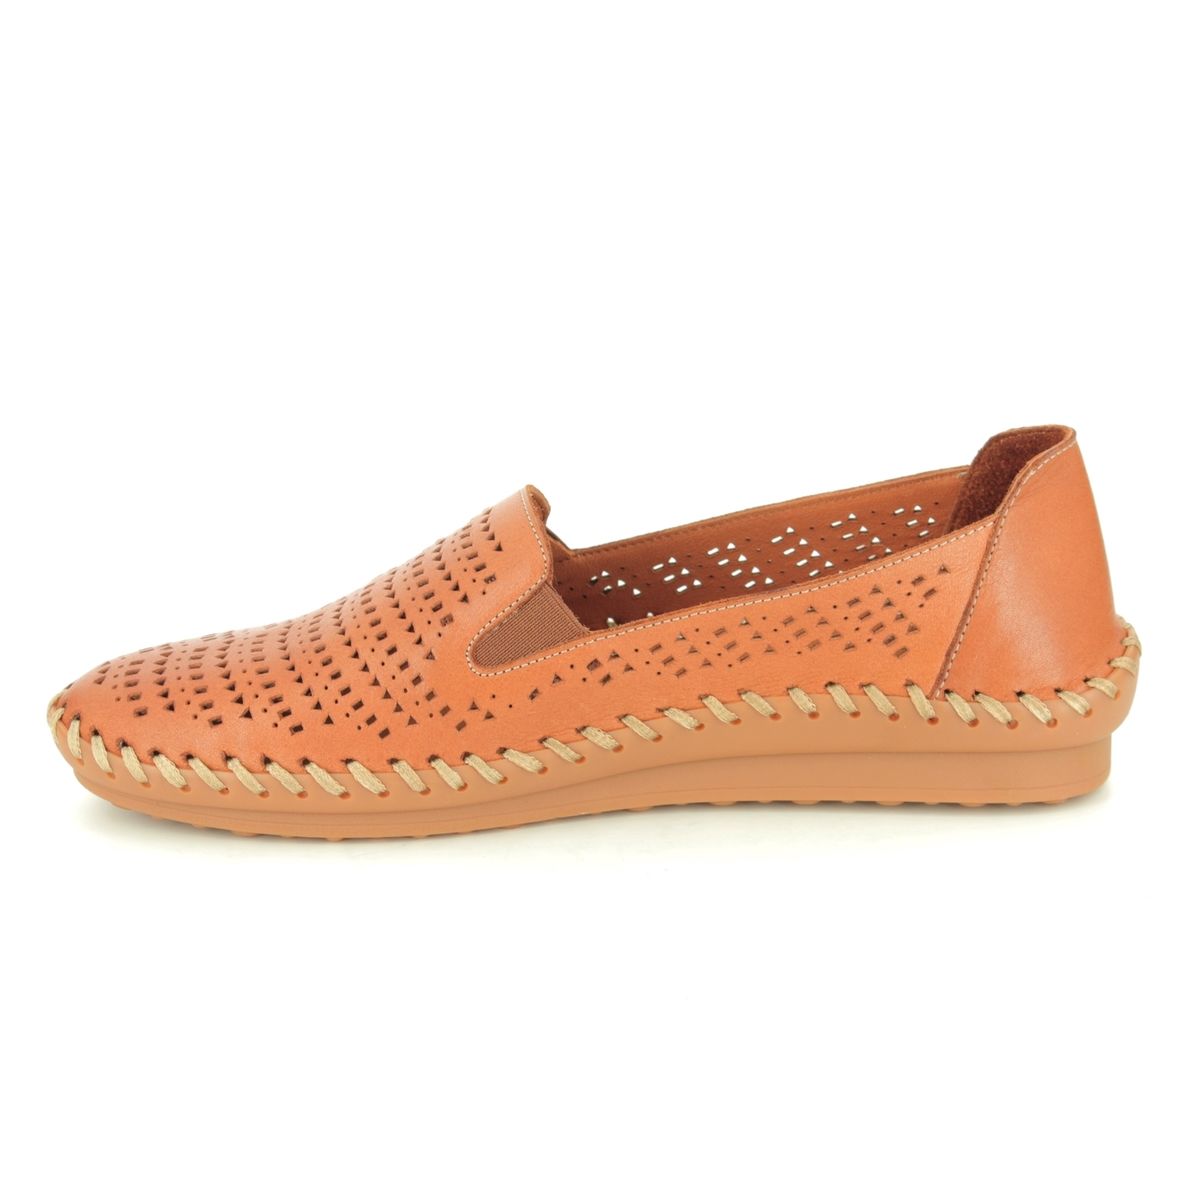 Roselli Gemma 2020-23 Tan Leather Comfort Slip On Shoes